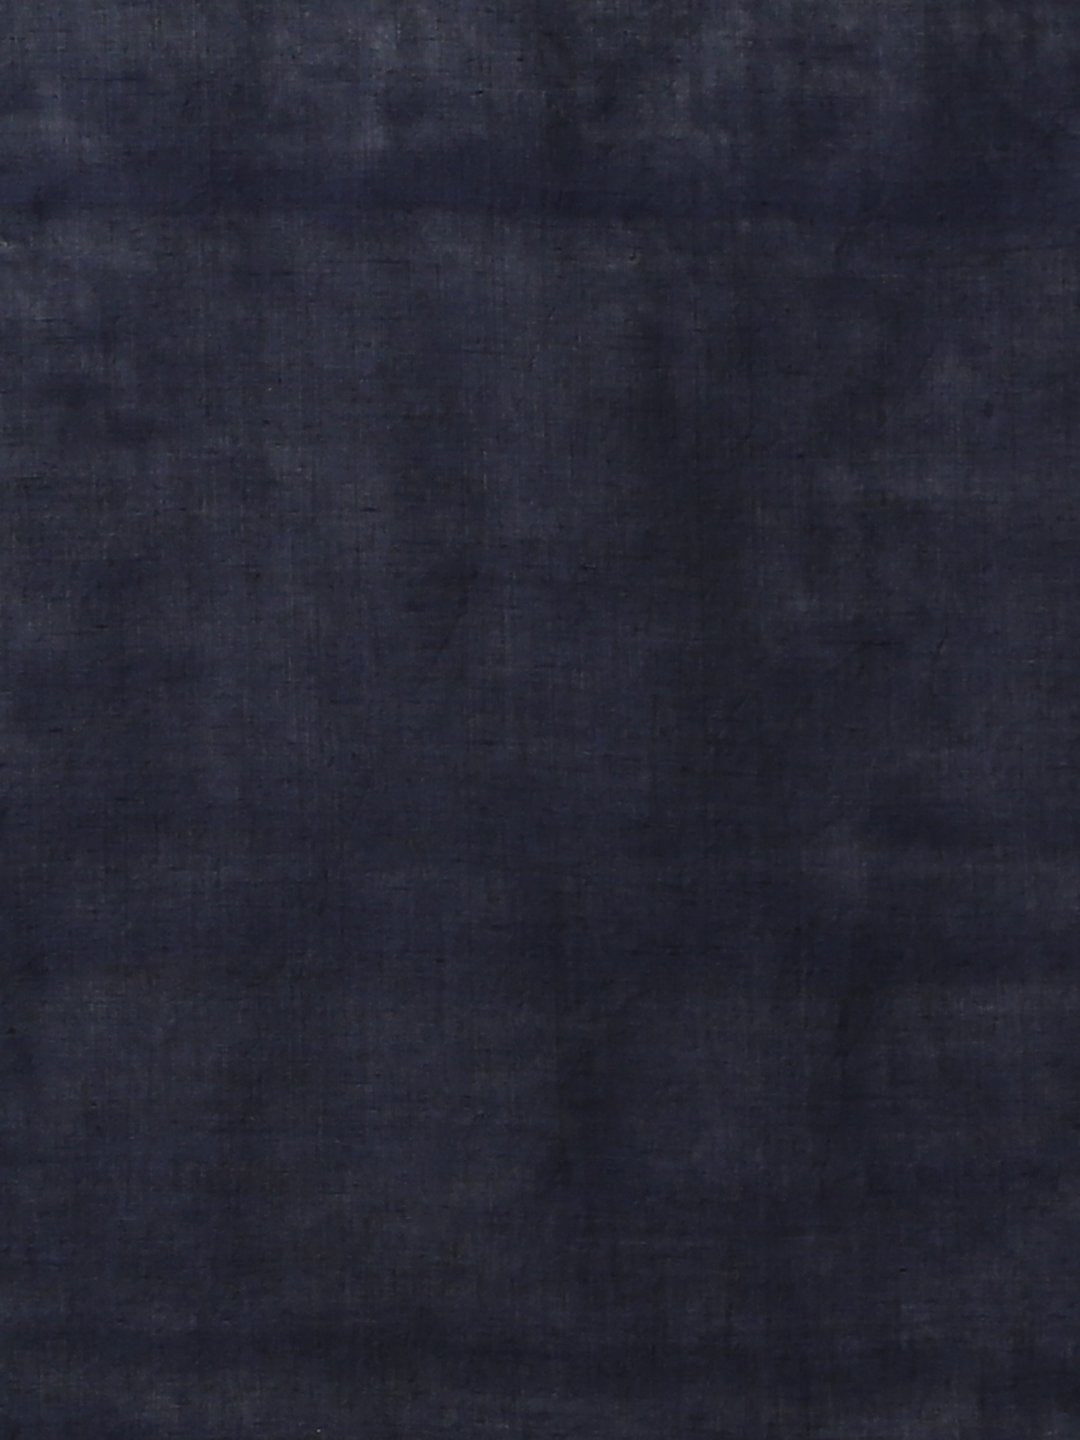 Navy blue cotton linen handloom saree